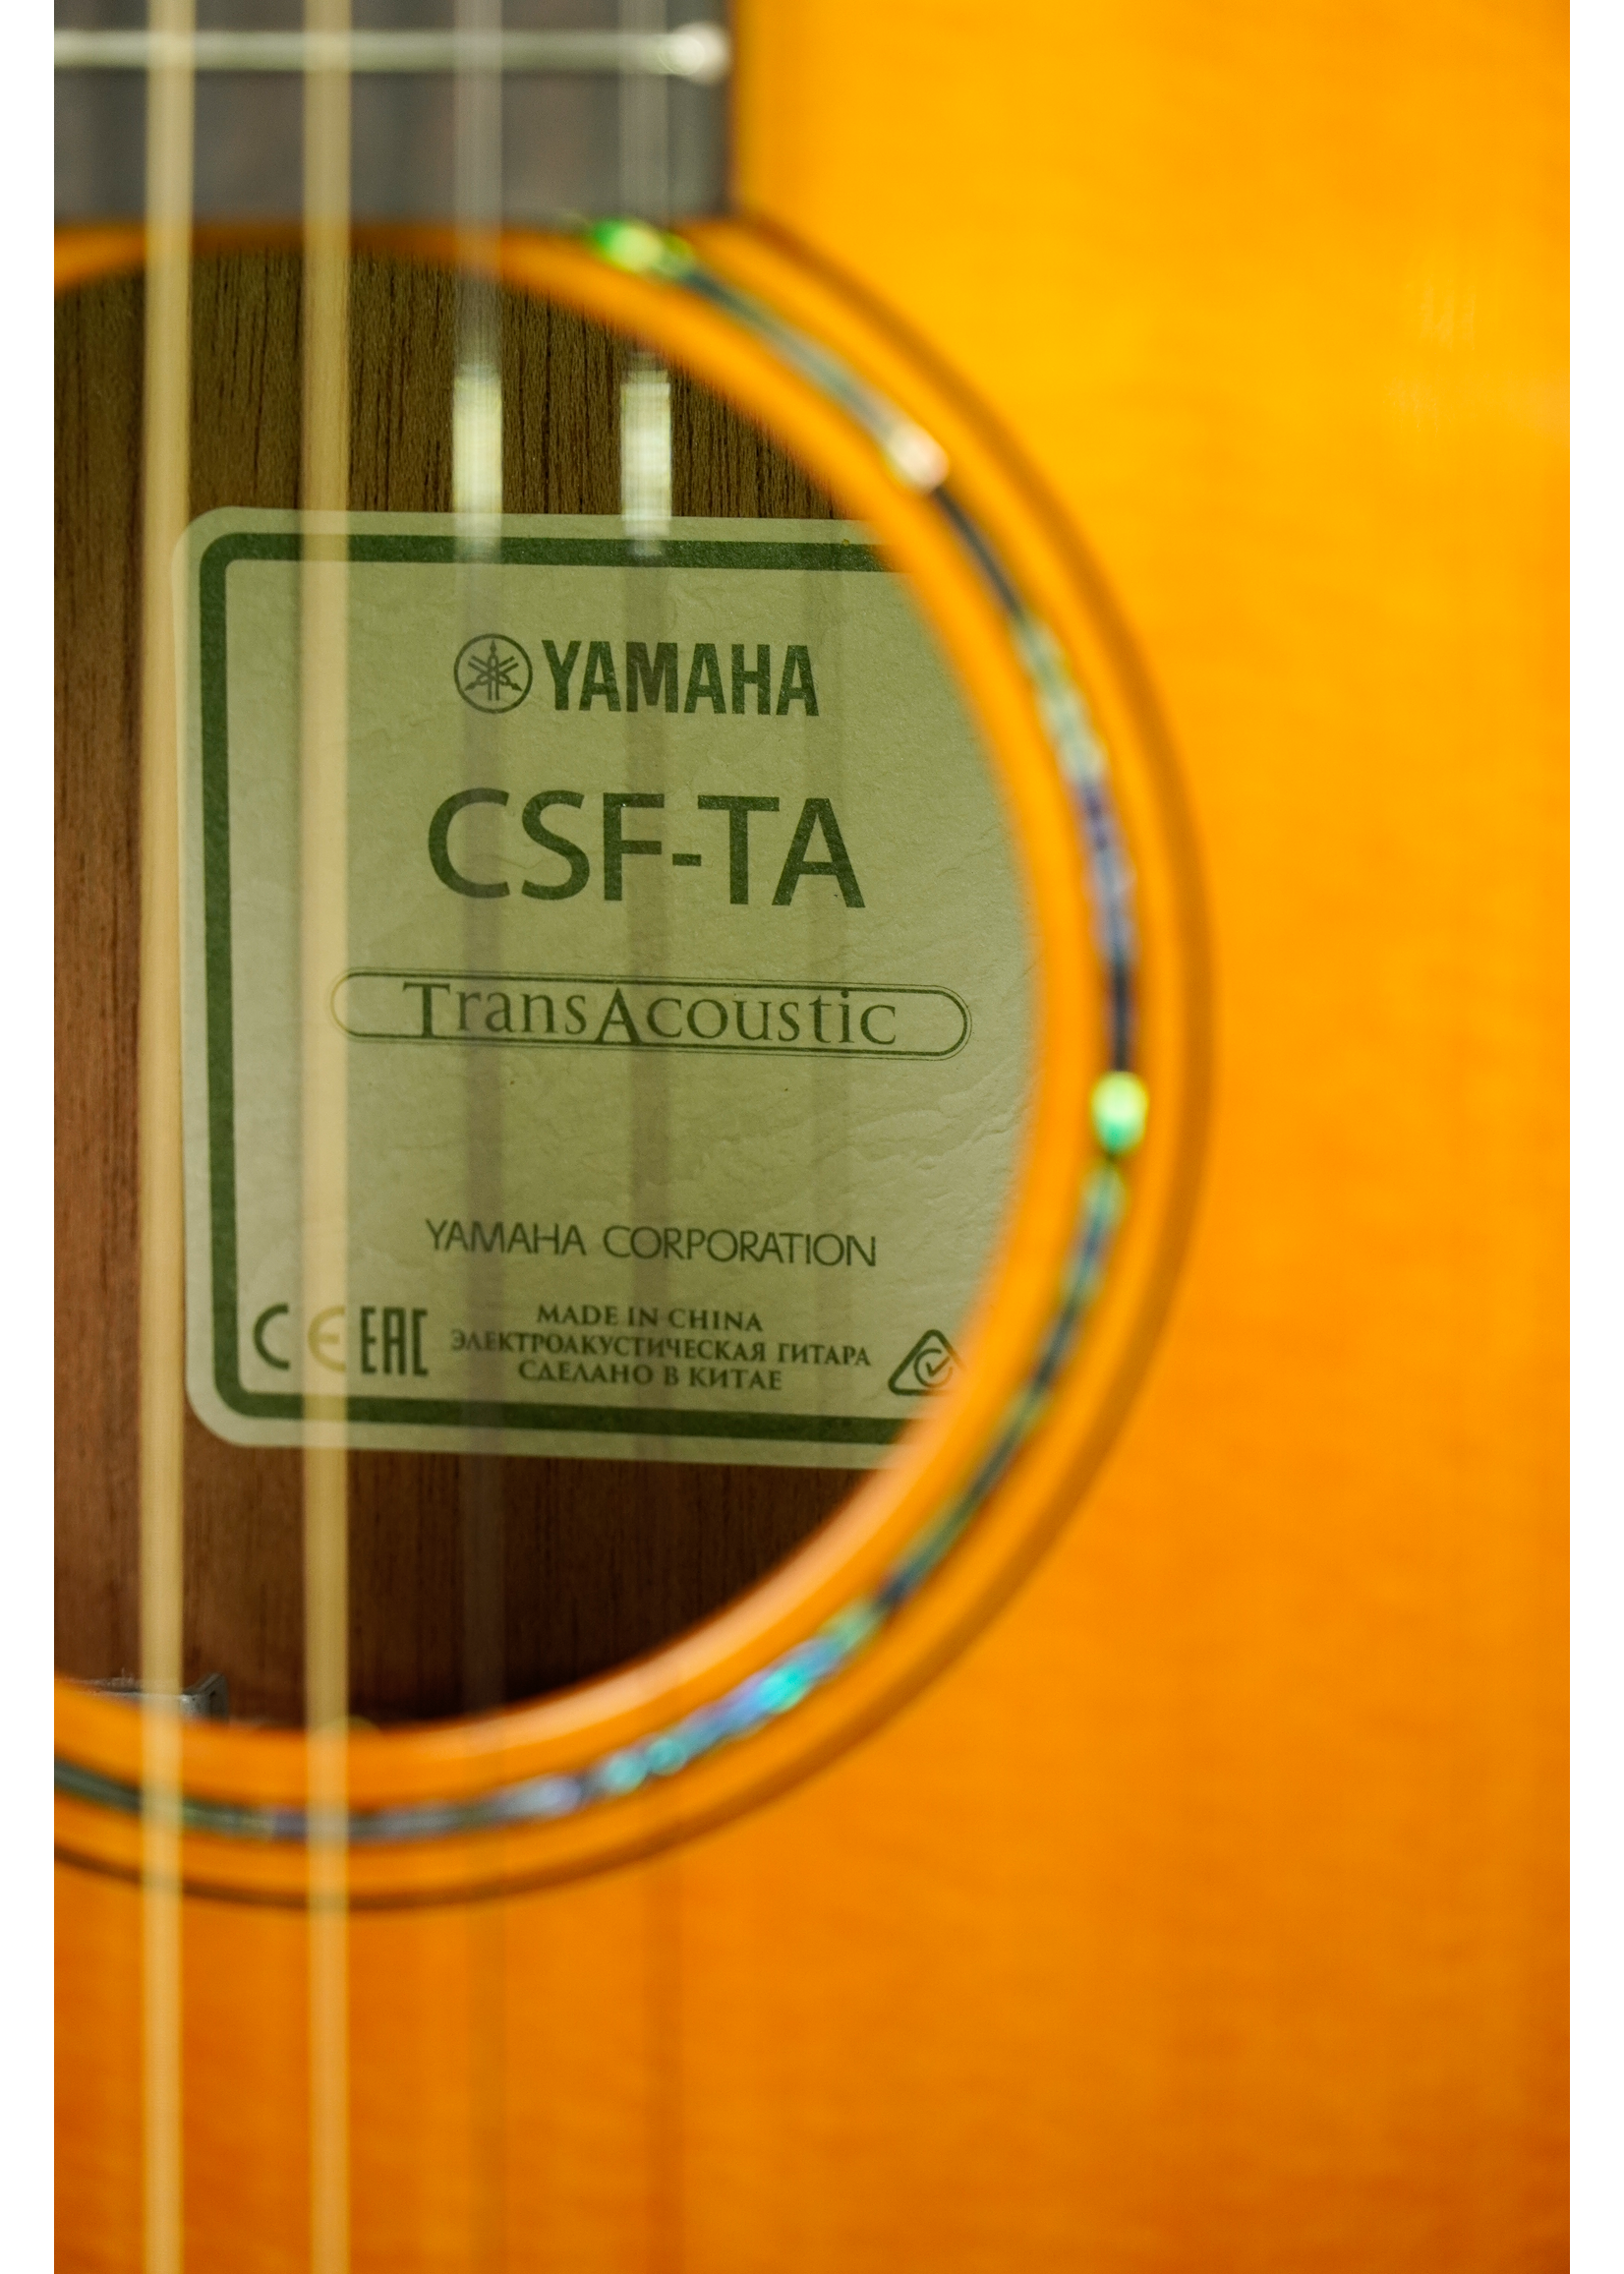 Yamaha Yamaha   CSF-TA Trans acoustic  Vintage Tint